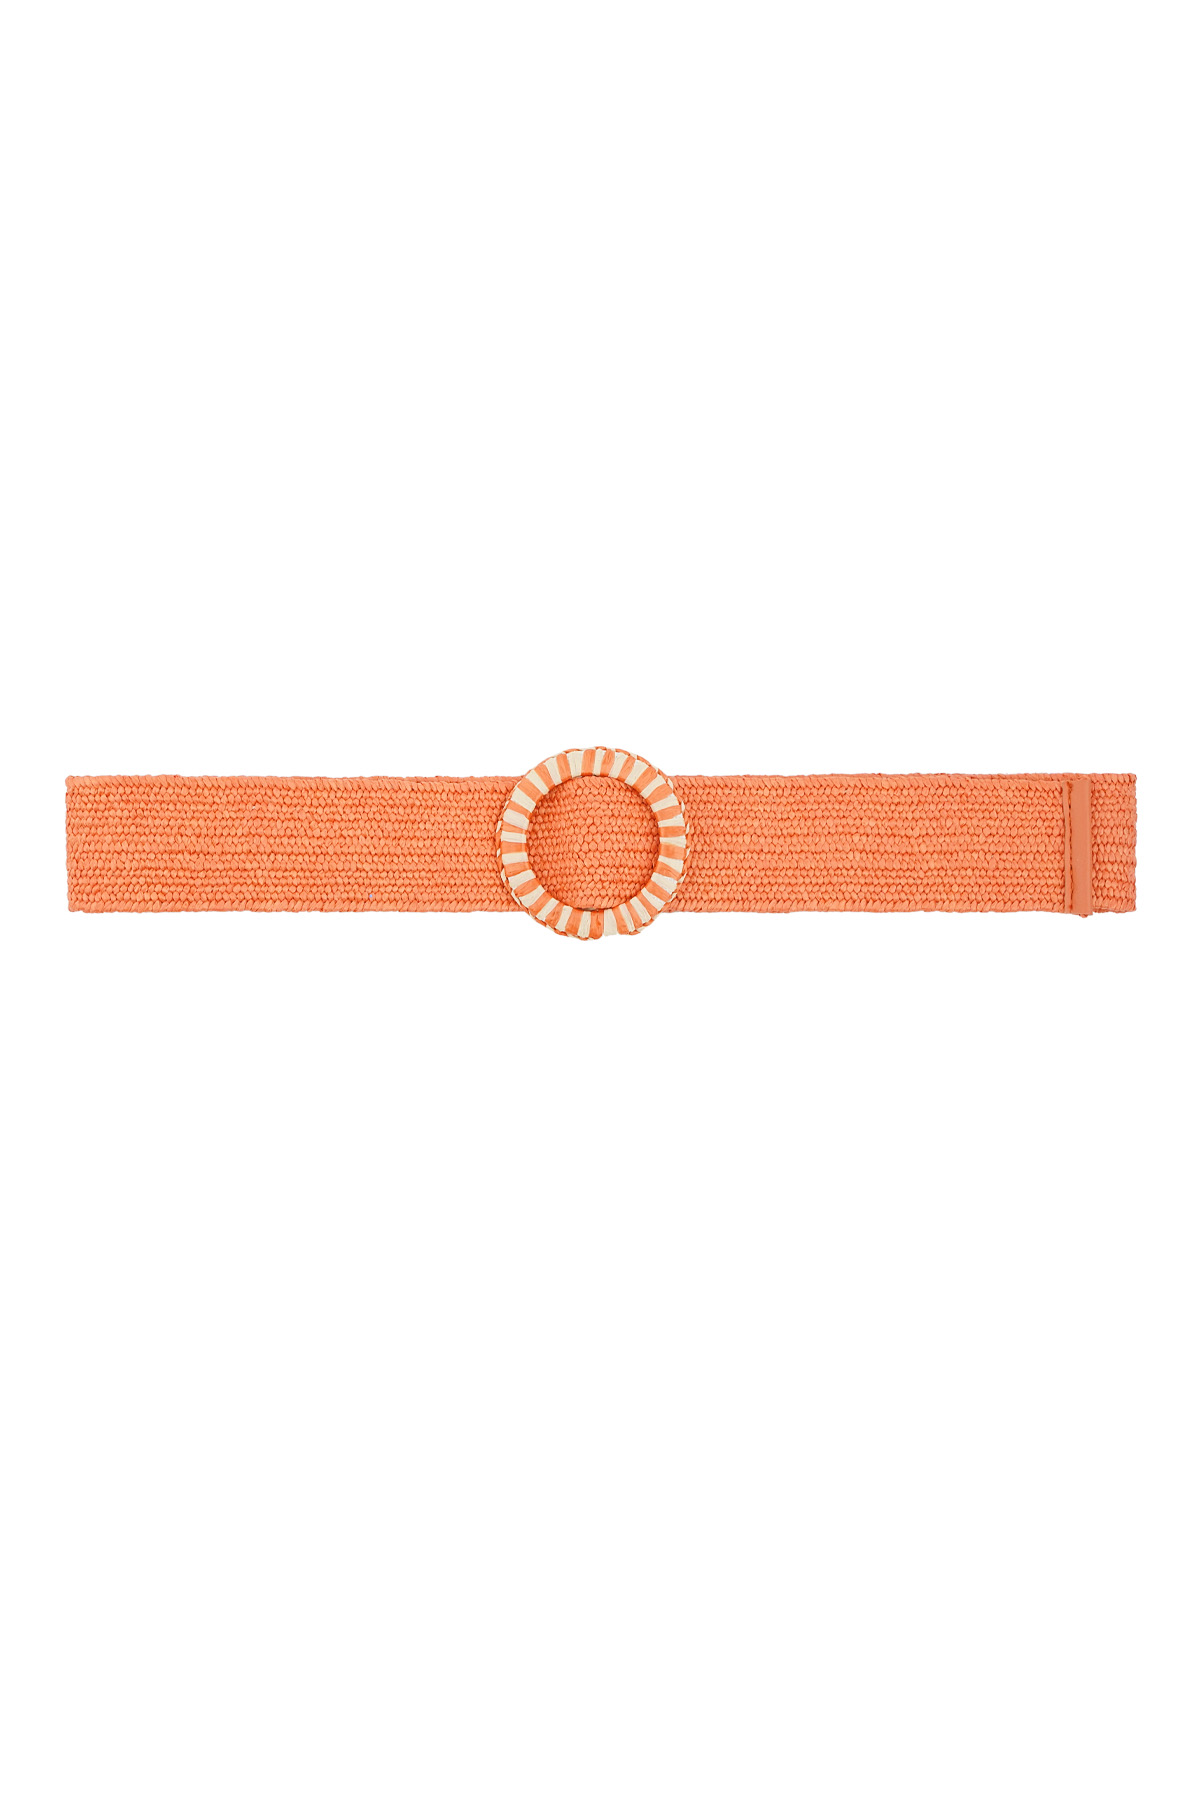 Colorful belt with print - orange 